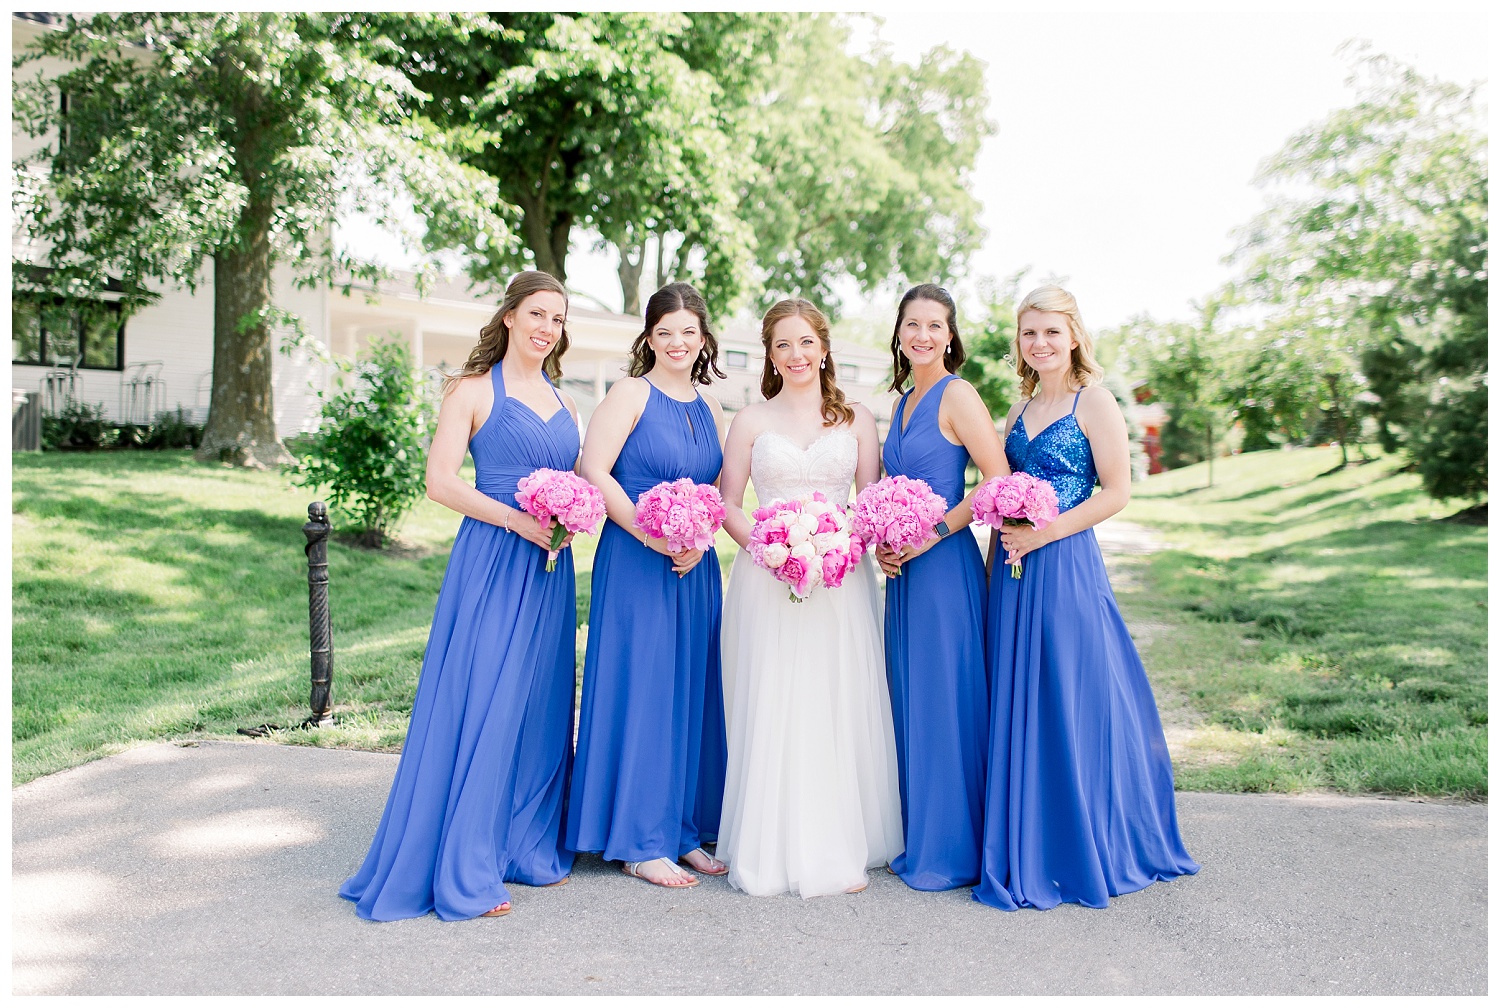 Royal blue bridesmaids dresses